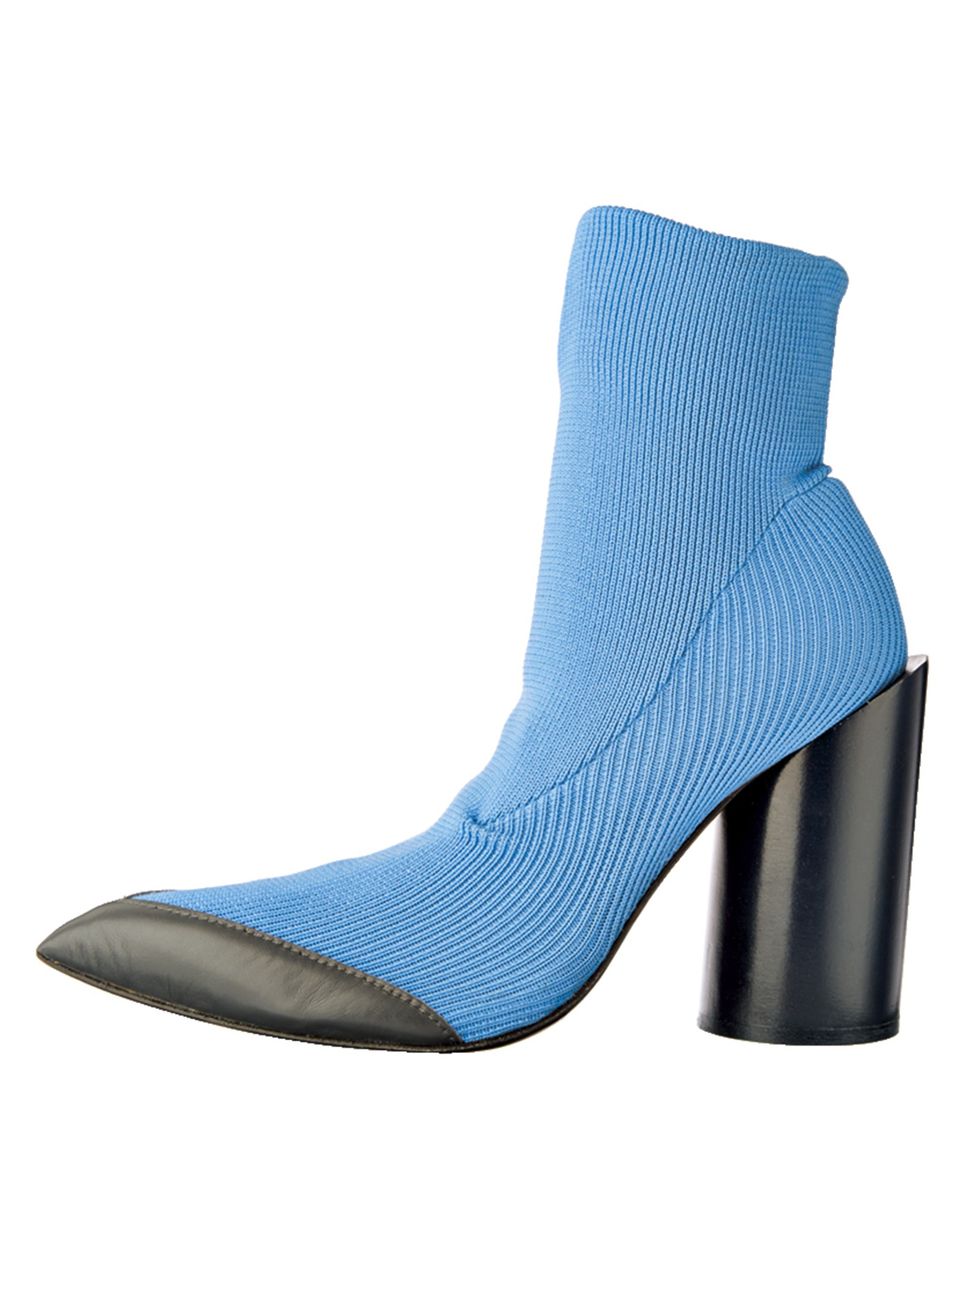 Footwear, Blue, Turquoise, Shoe, Aqua, Teal, Boot, High heels, Turquoise, Electric blue, 